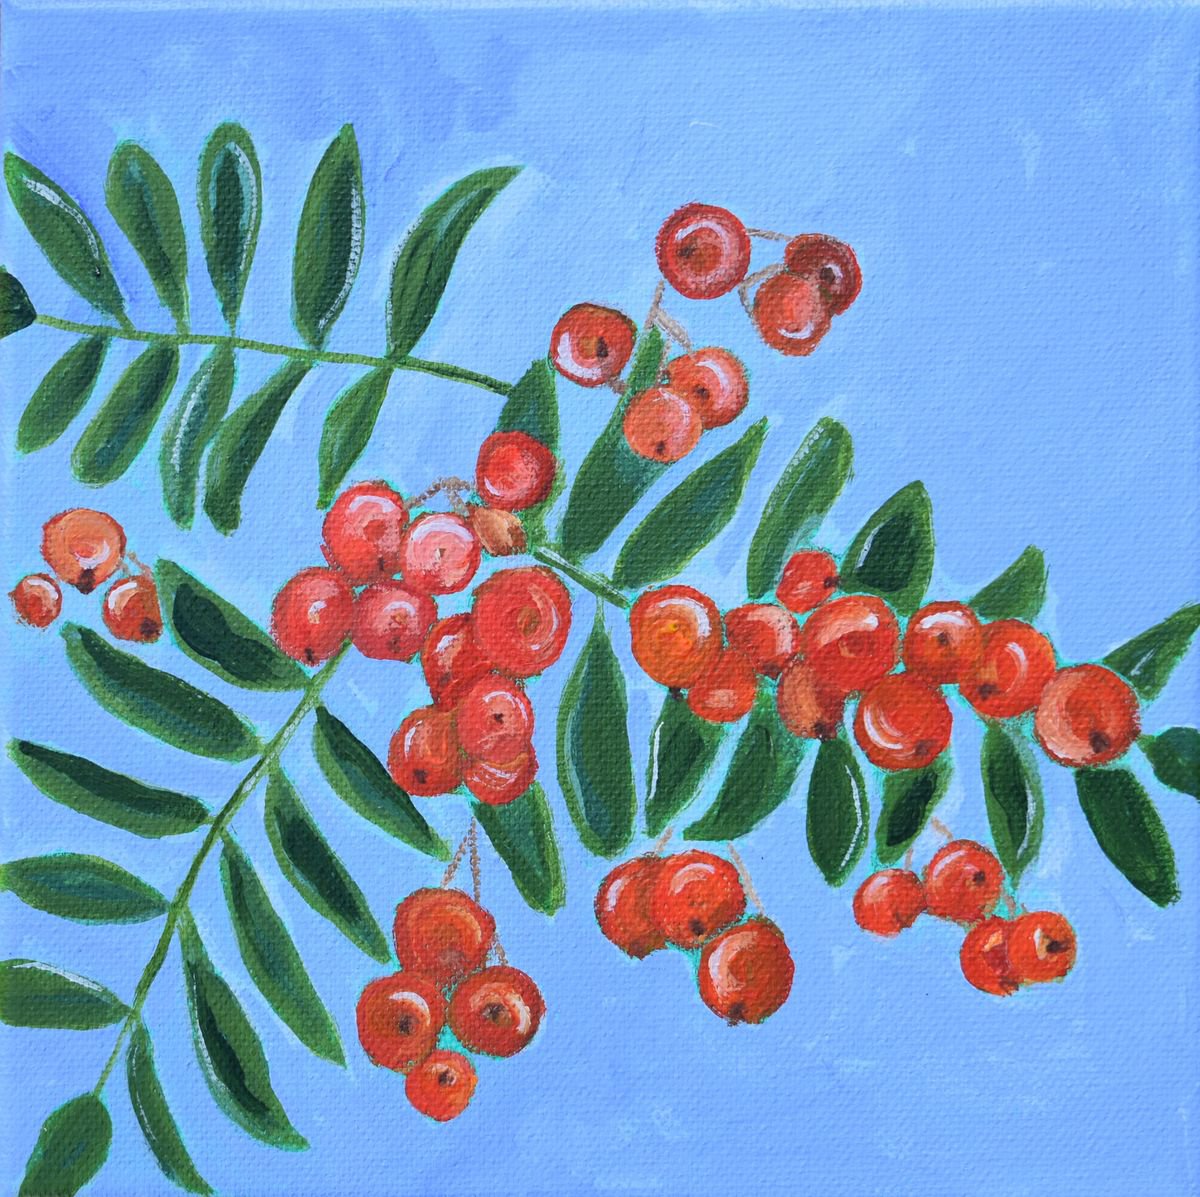 Moffat rowan berries by Alison Deegan